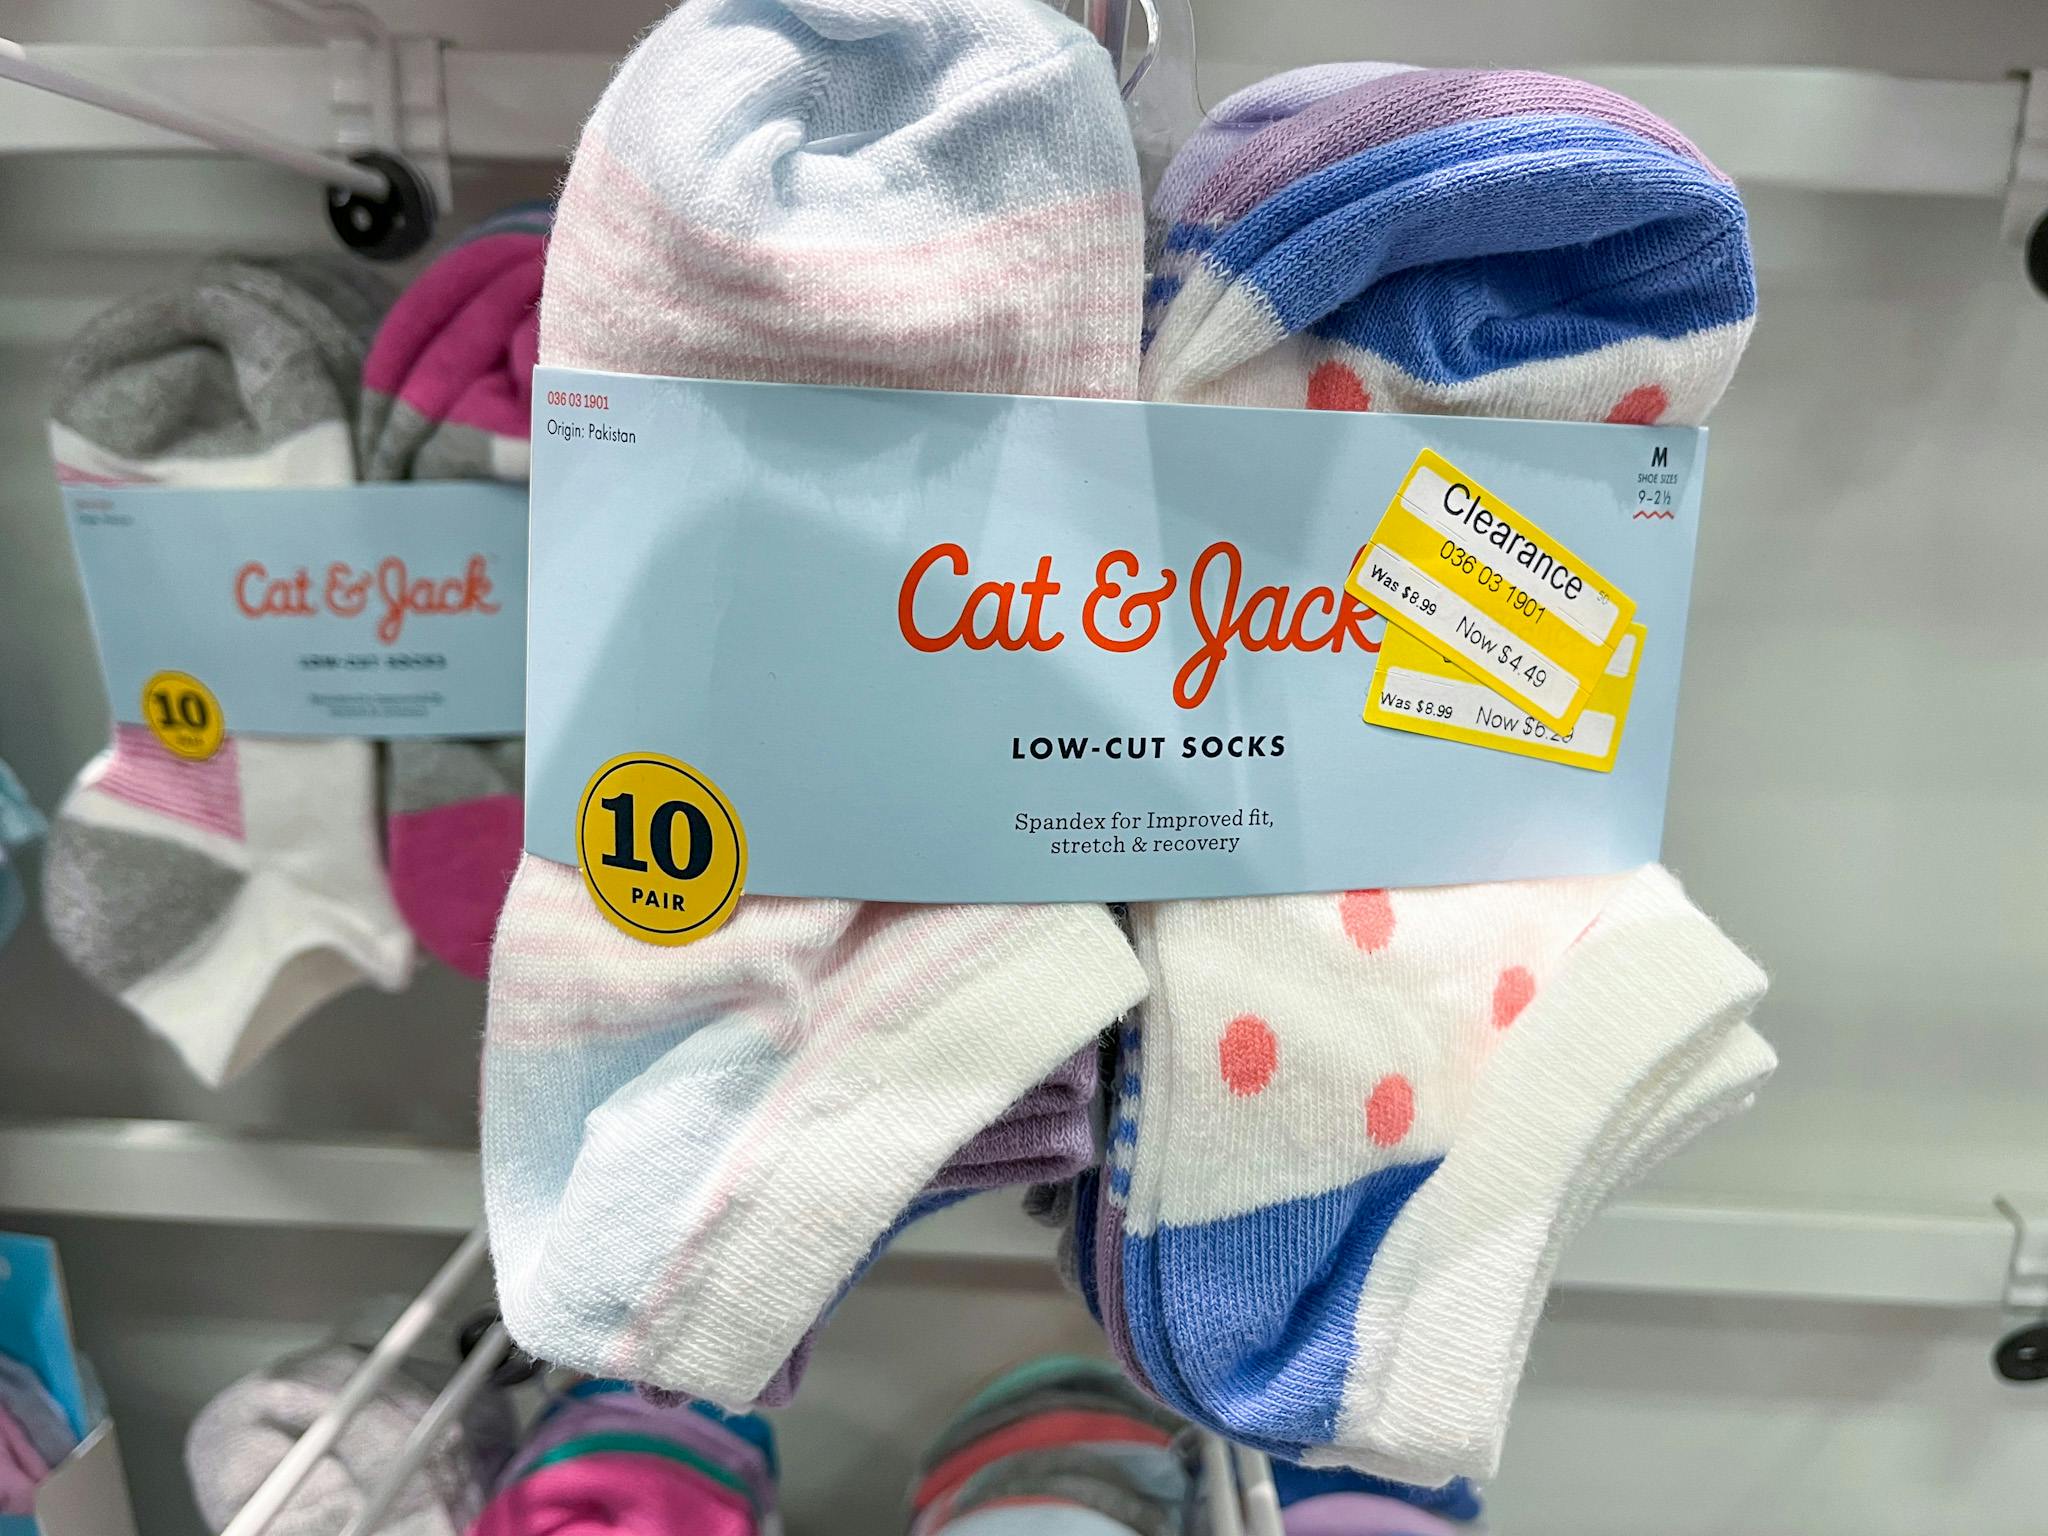 Cat & Jack Girls Underwear 10-Pack Just $6.99 at Target